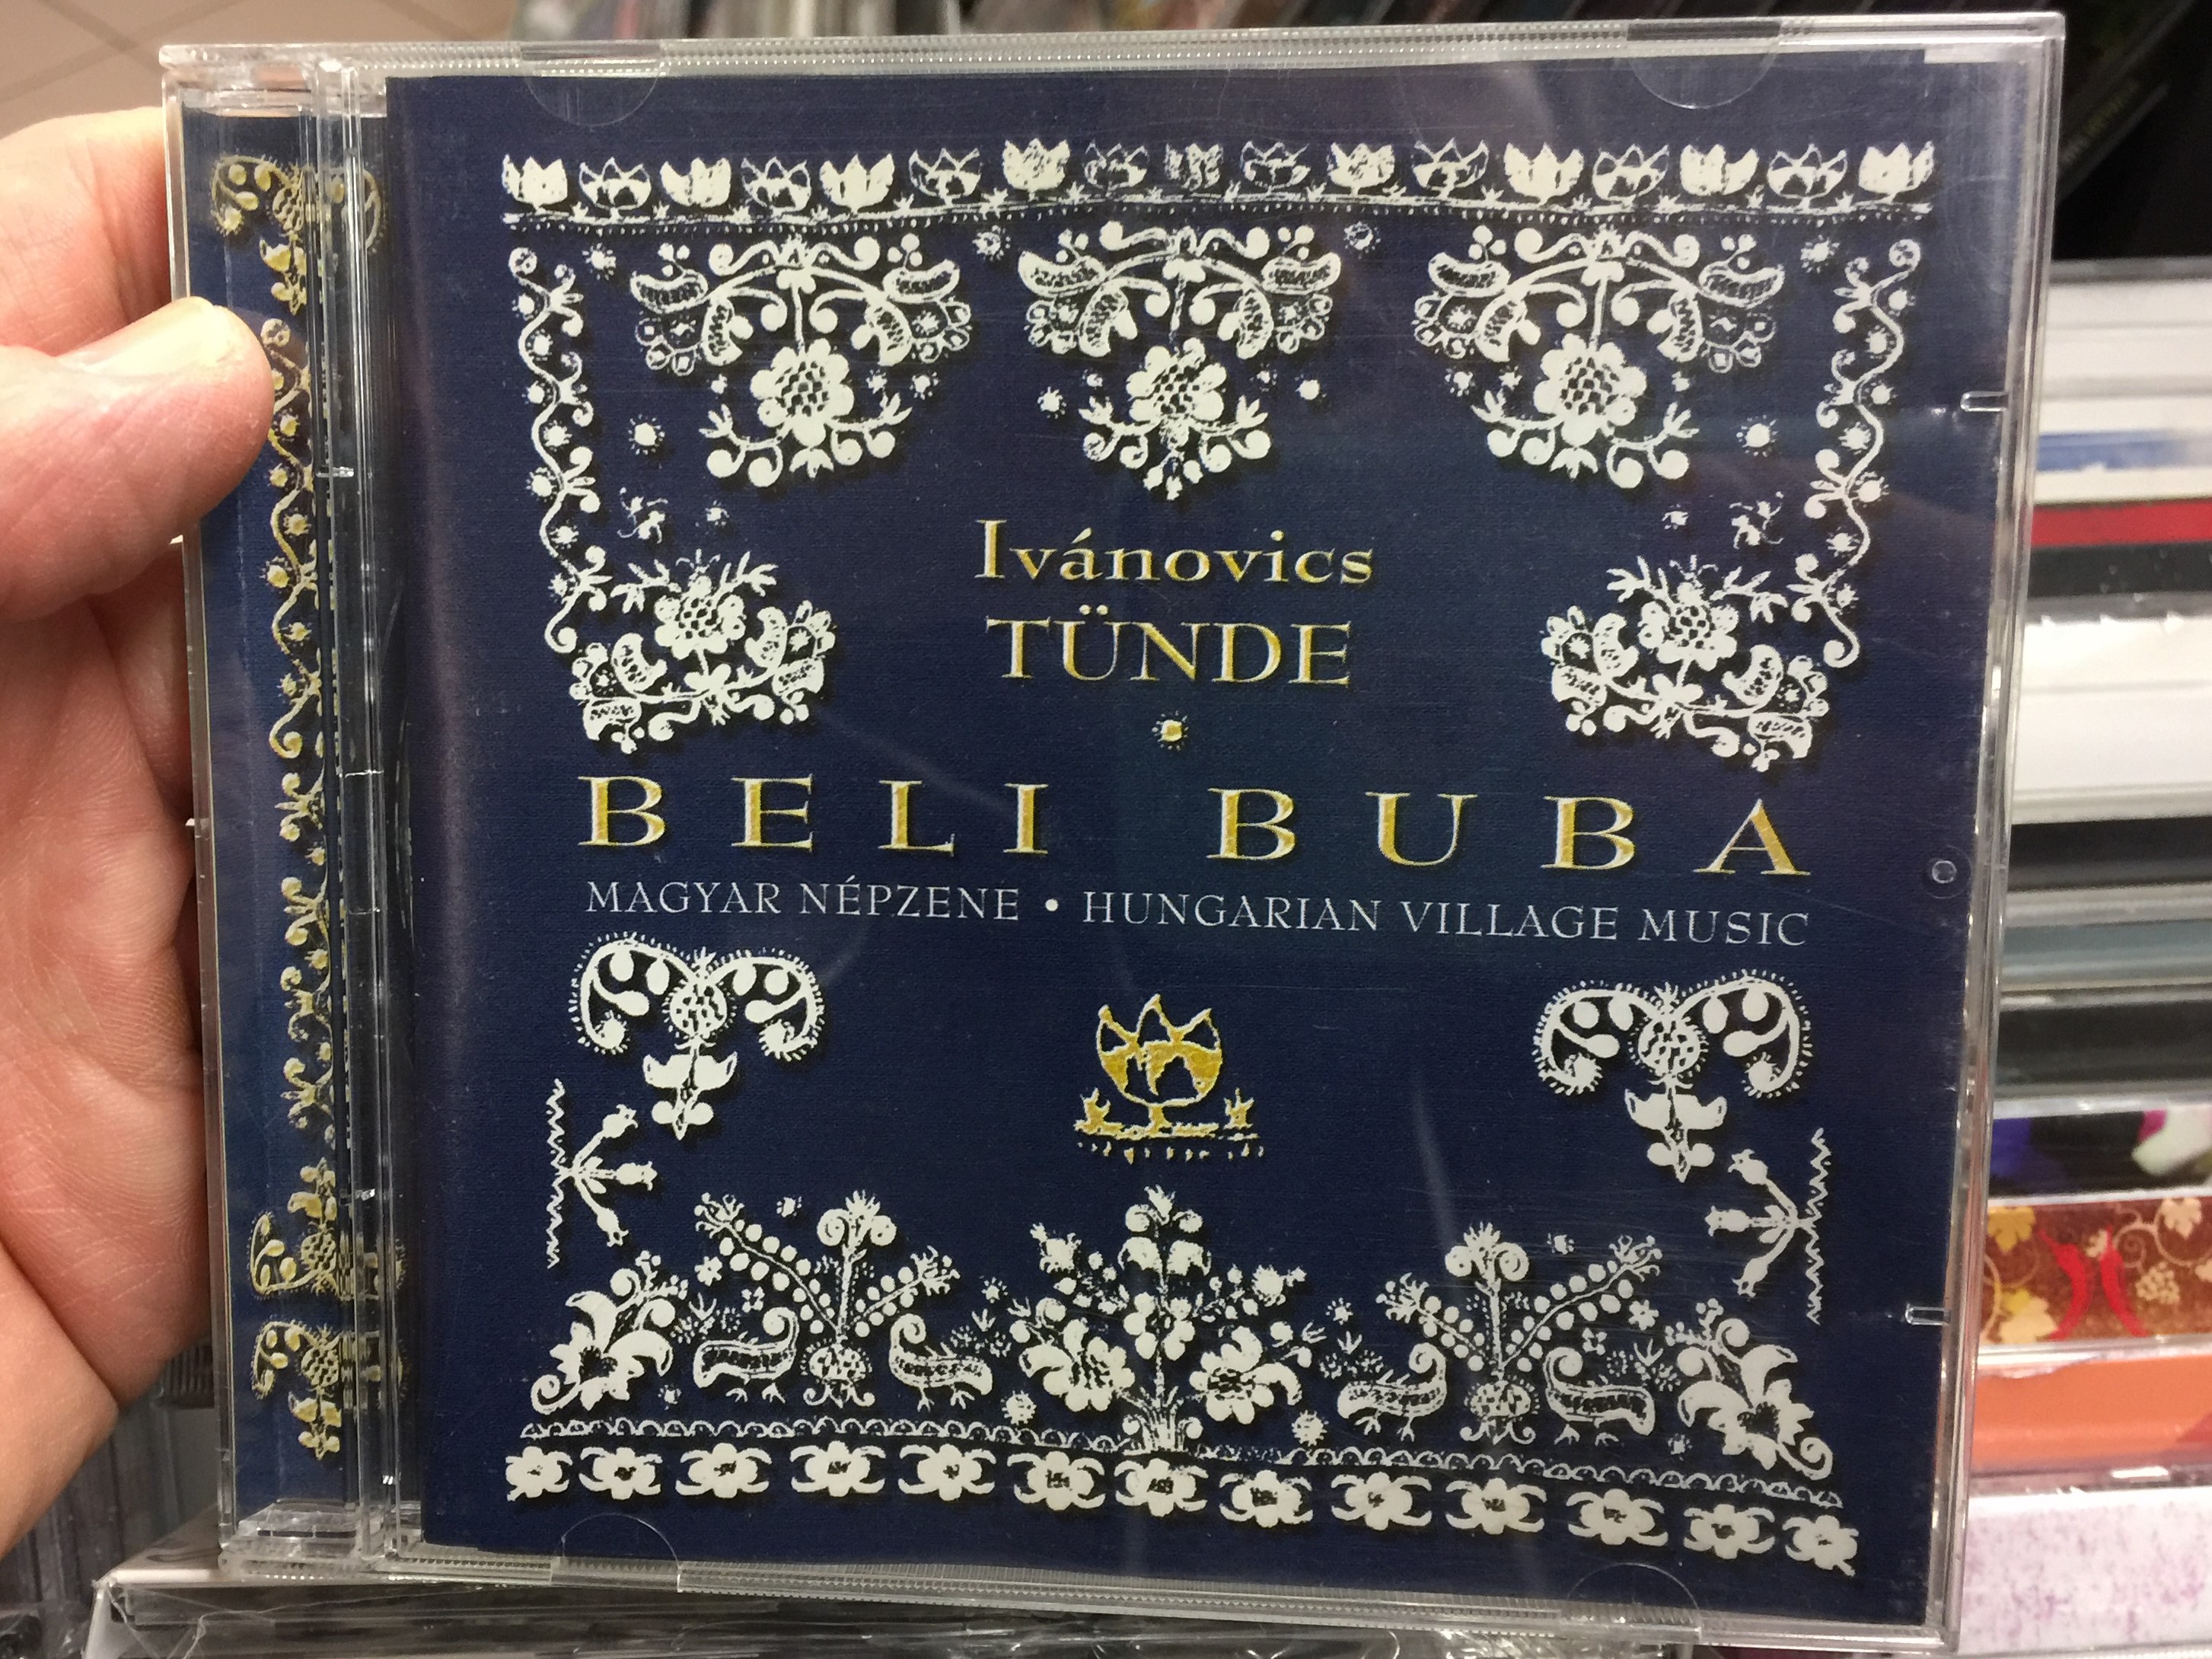 iv-novics-t-nde-beli-buba-magyar-n-pzene-hungarian-village-music-periferic-records-audio-cd-2001-bgcd-081-1-.jpg